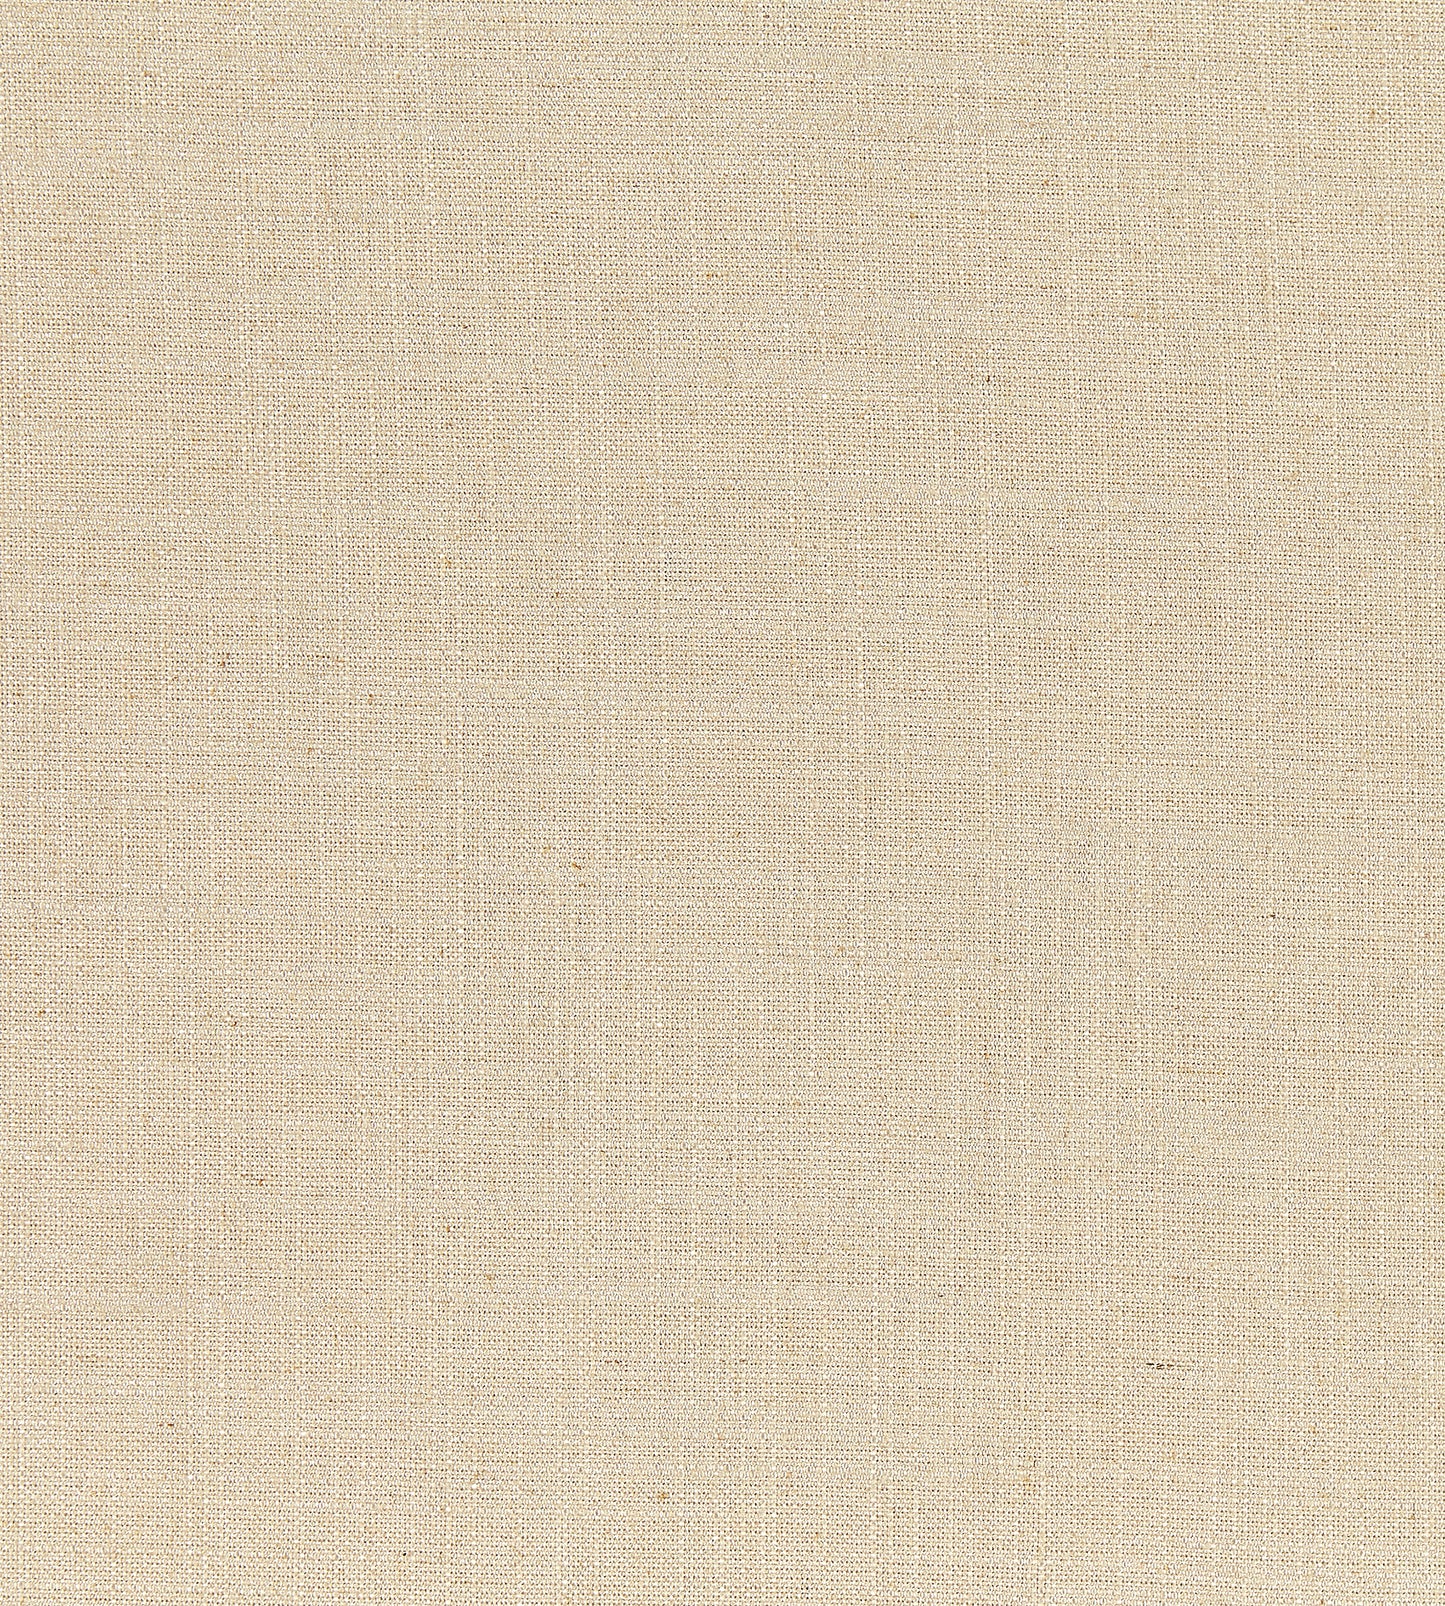 Purchase Boris Kroll Fabric Product SC 0002K65106, Hampton Weave Cream 1